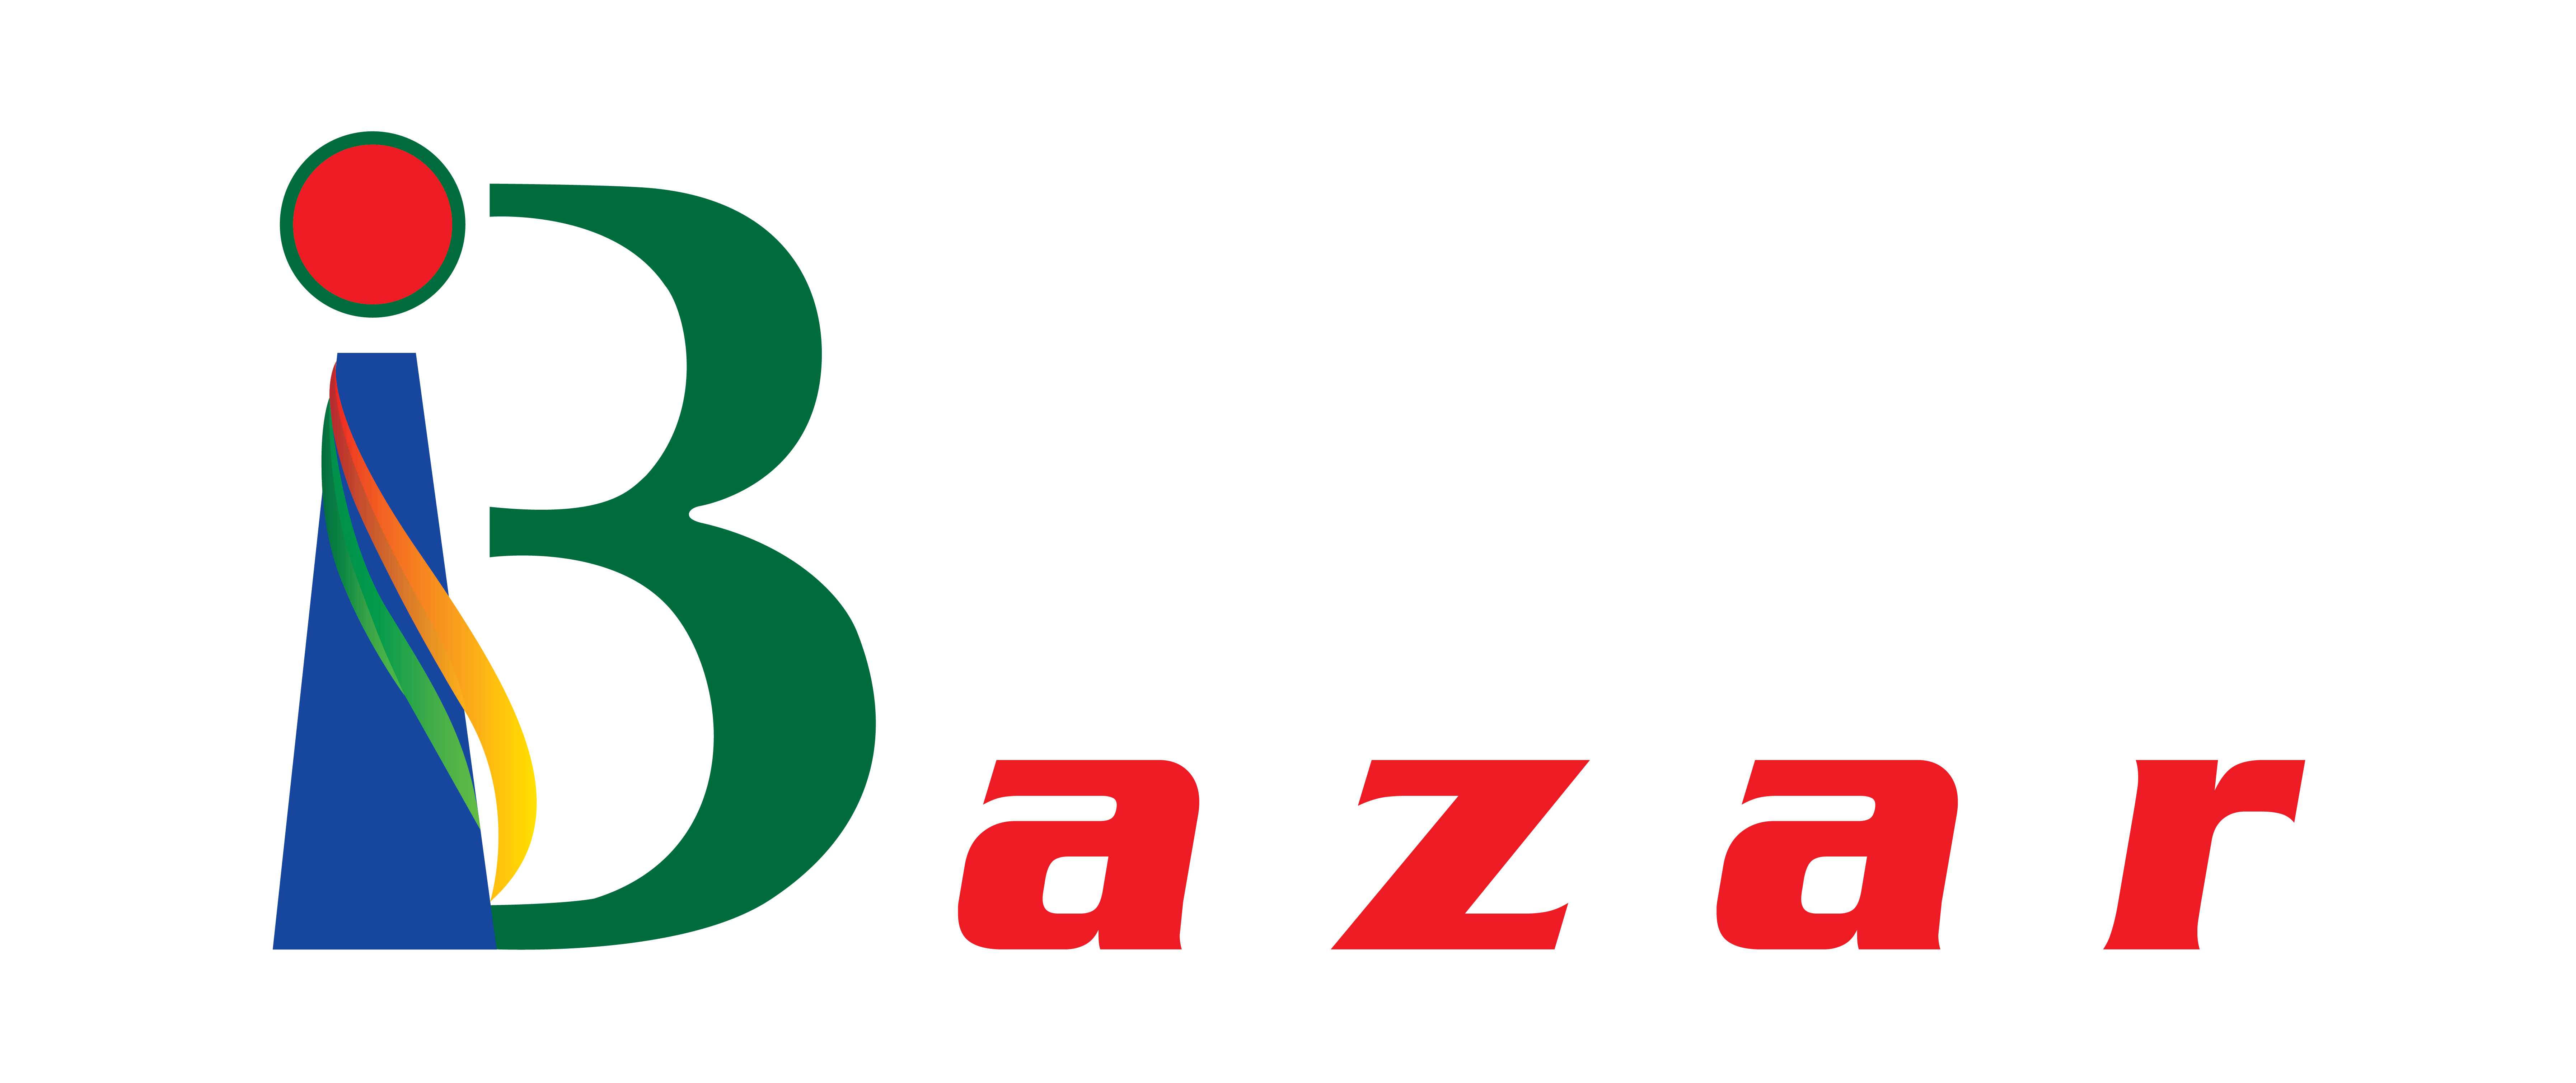 I-Bazar